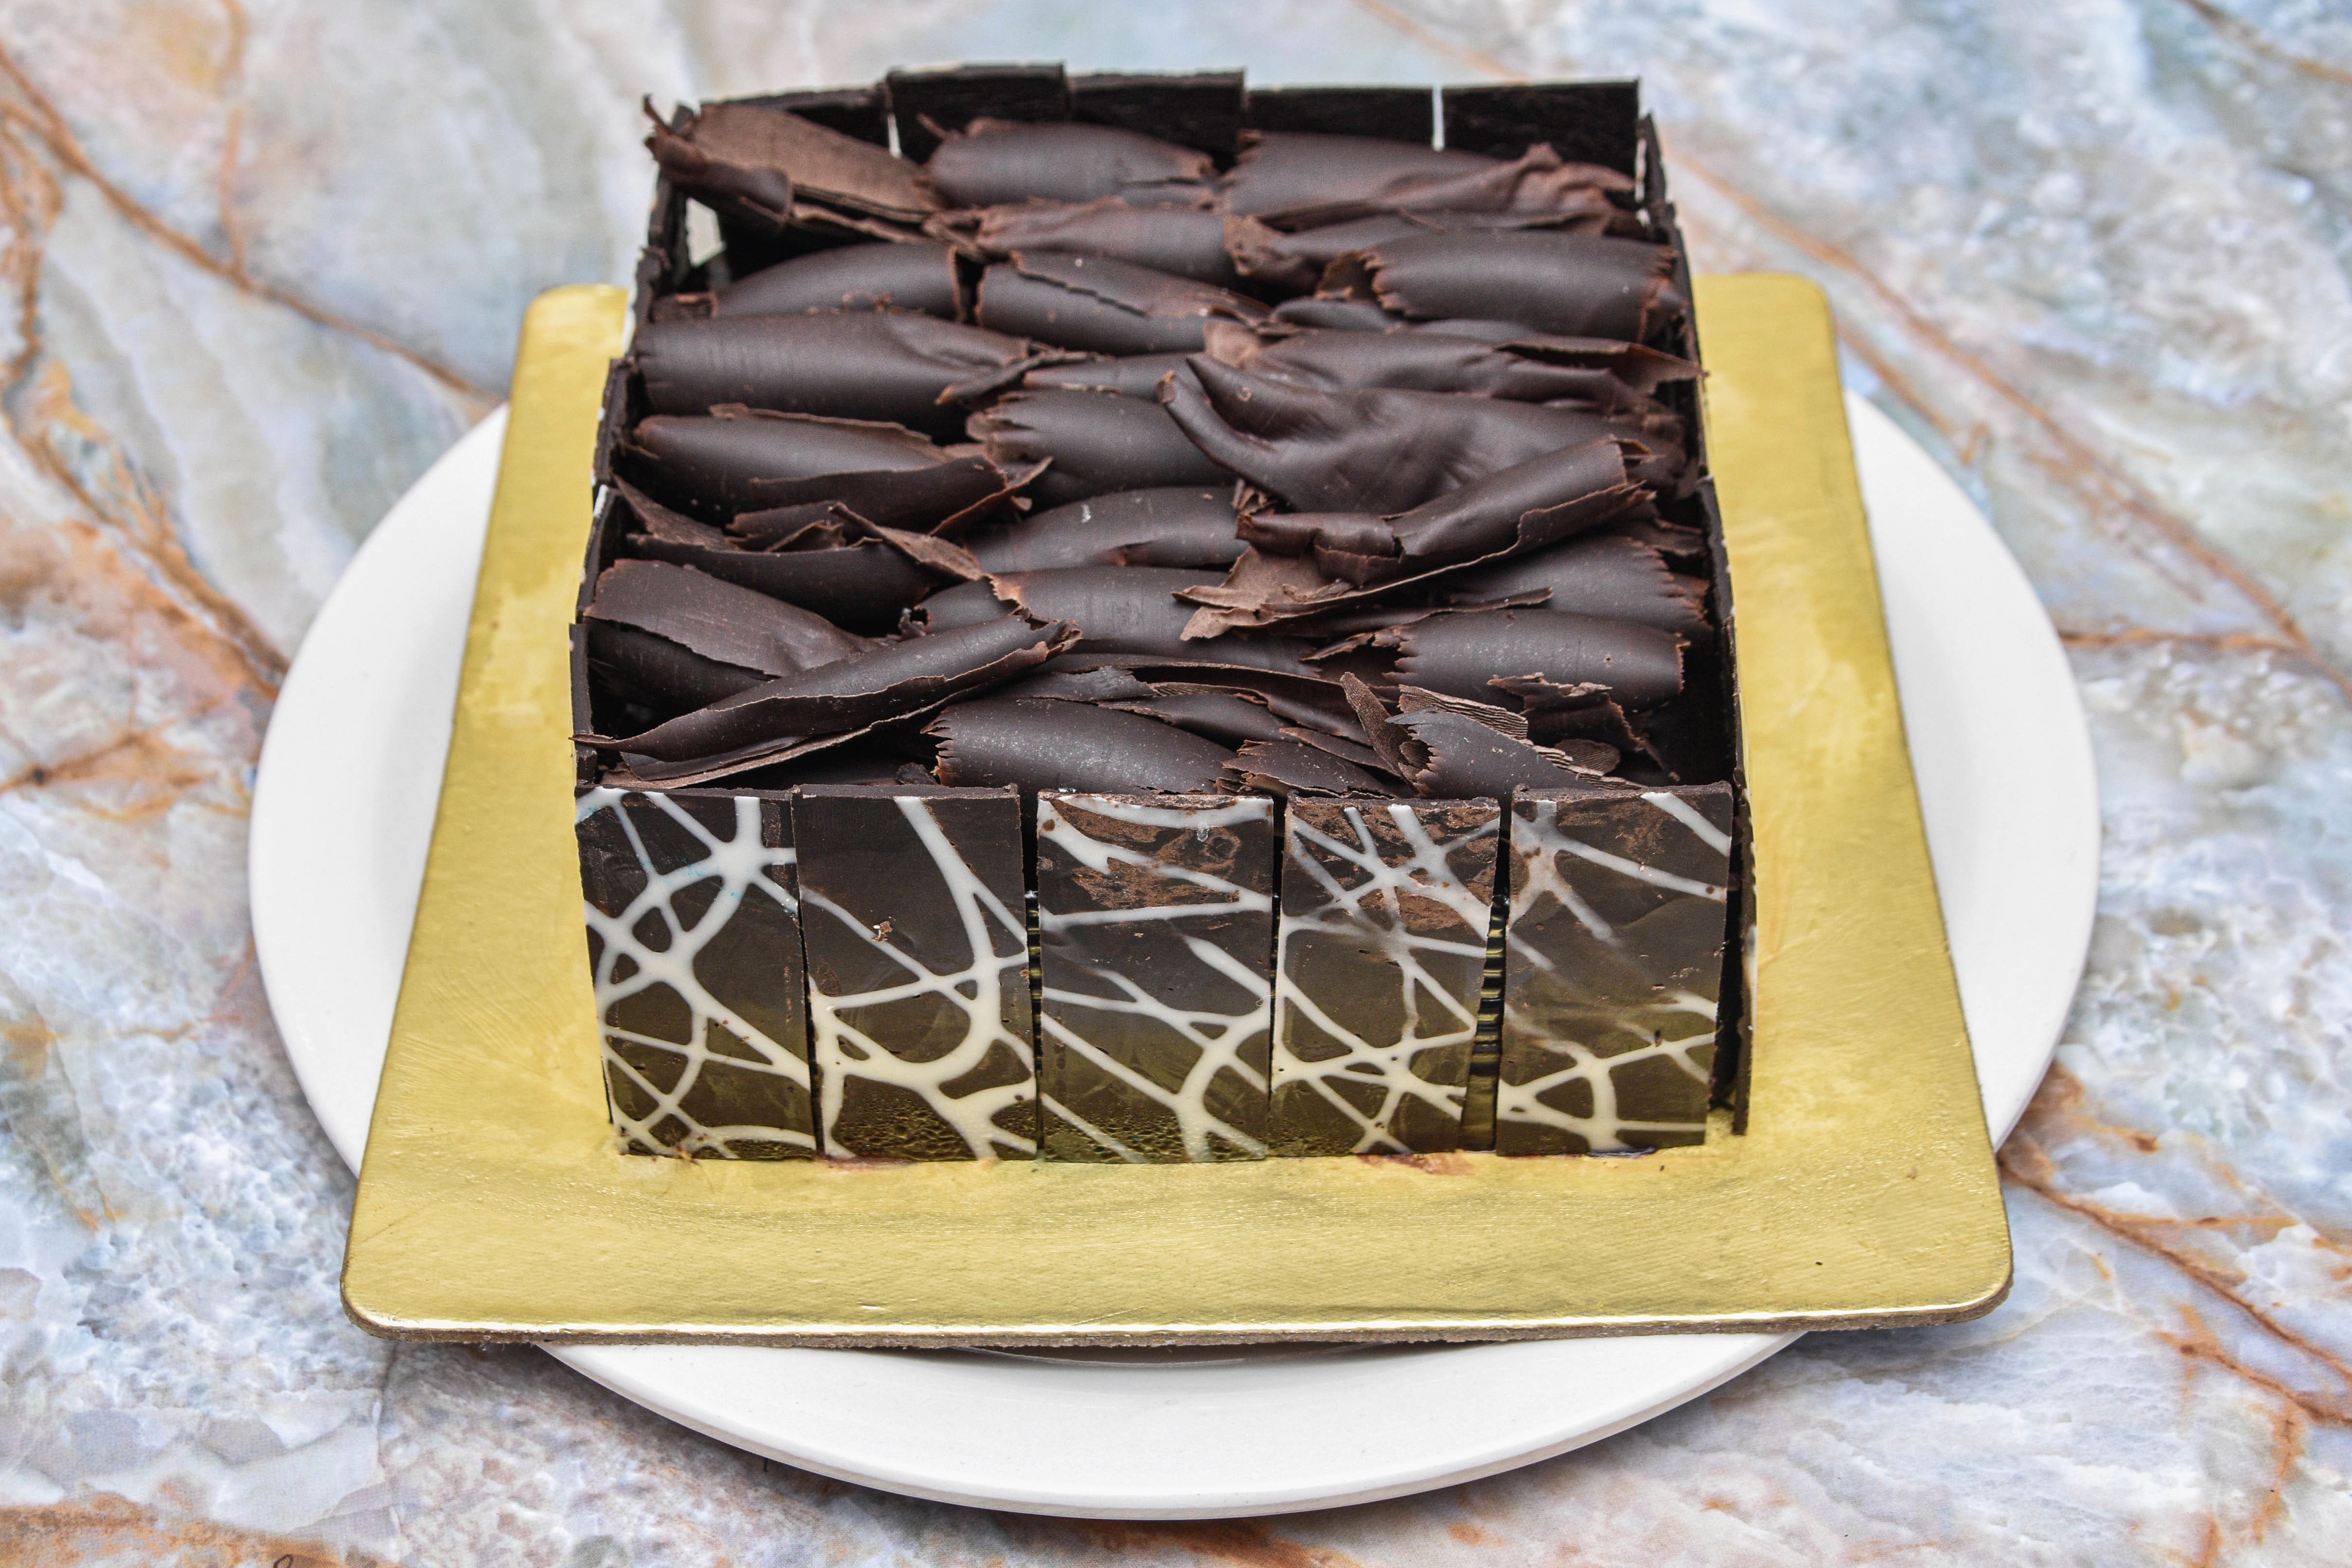 Chocolate and Vanilla Sponge Two Tiered Birthday Cake